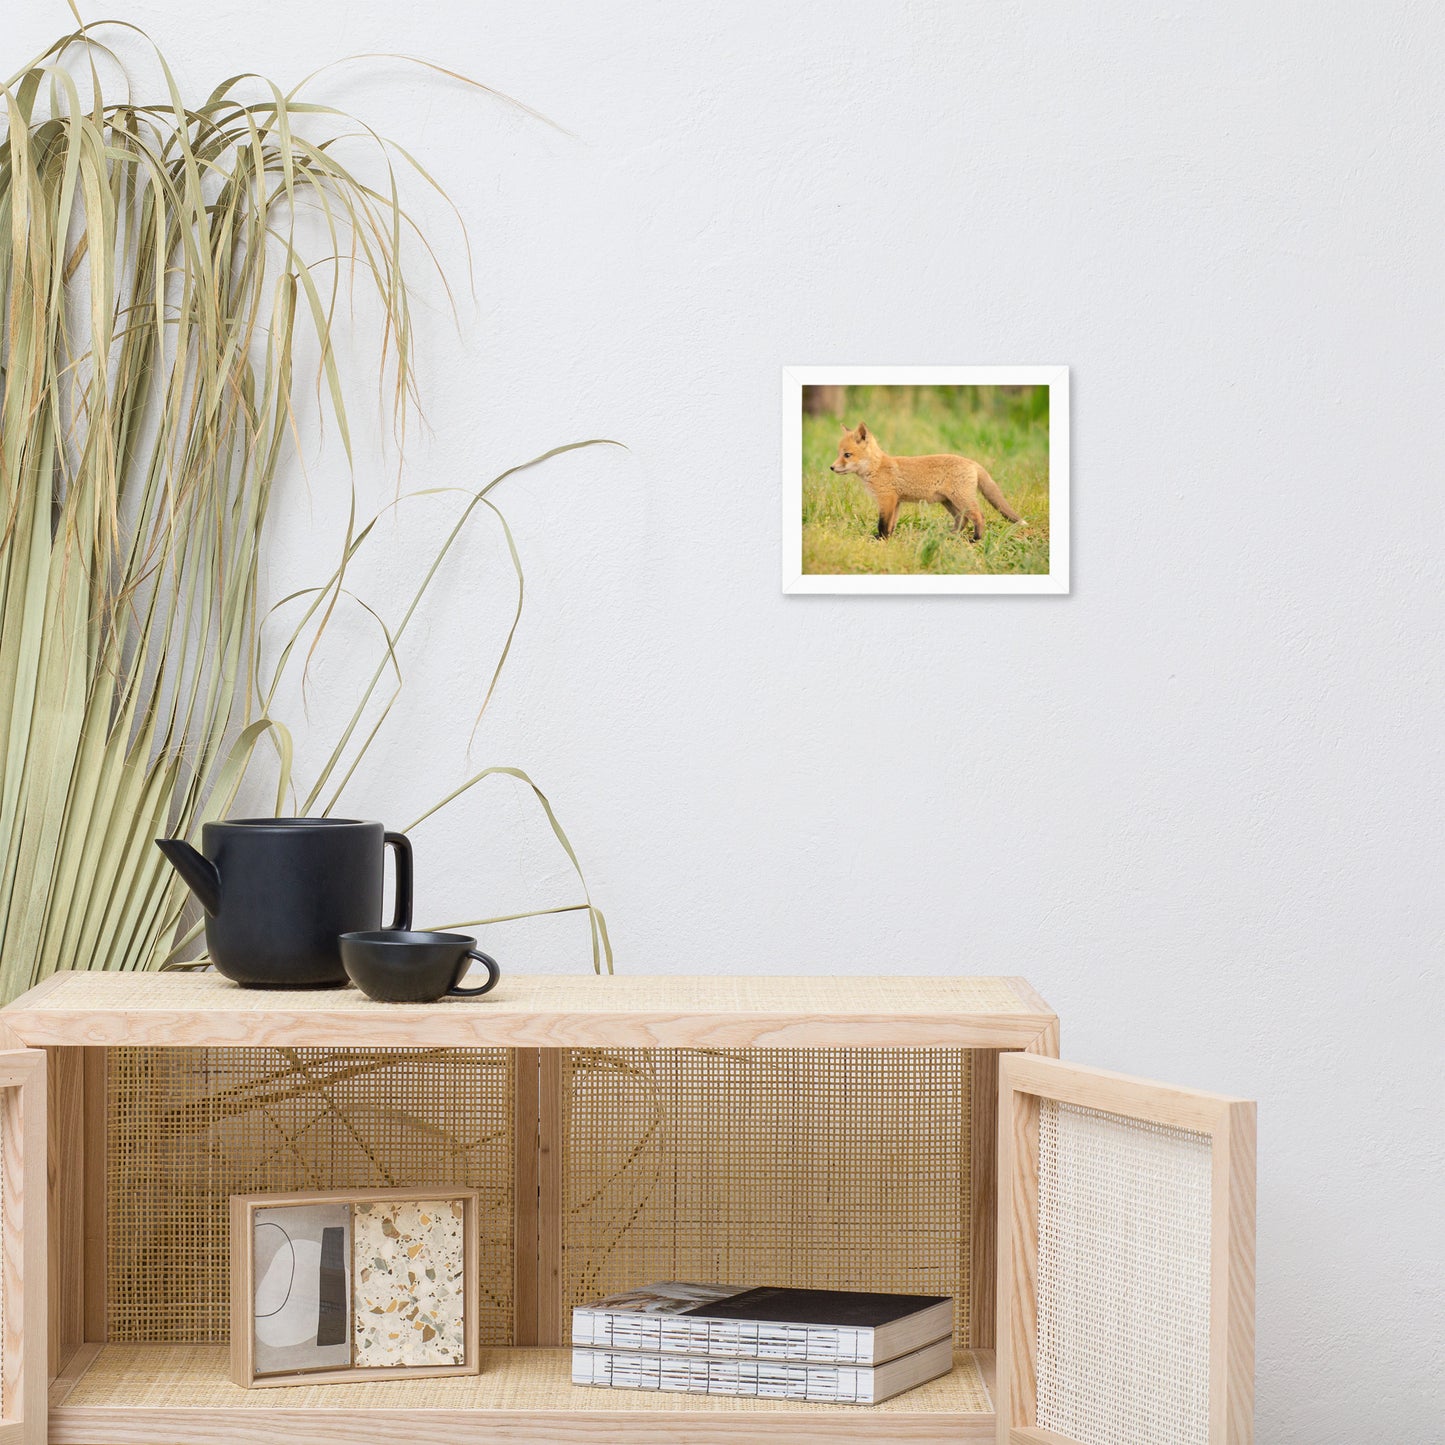 Nursery Room Artwork: Baby Fox Pup In Meadow/ Animal / Wildlife / Nature Photographic Artwork - Framed Artwork - Wall Decor